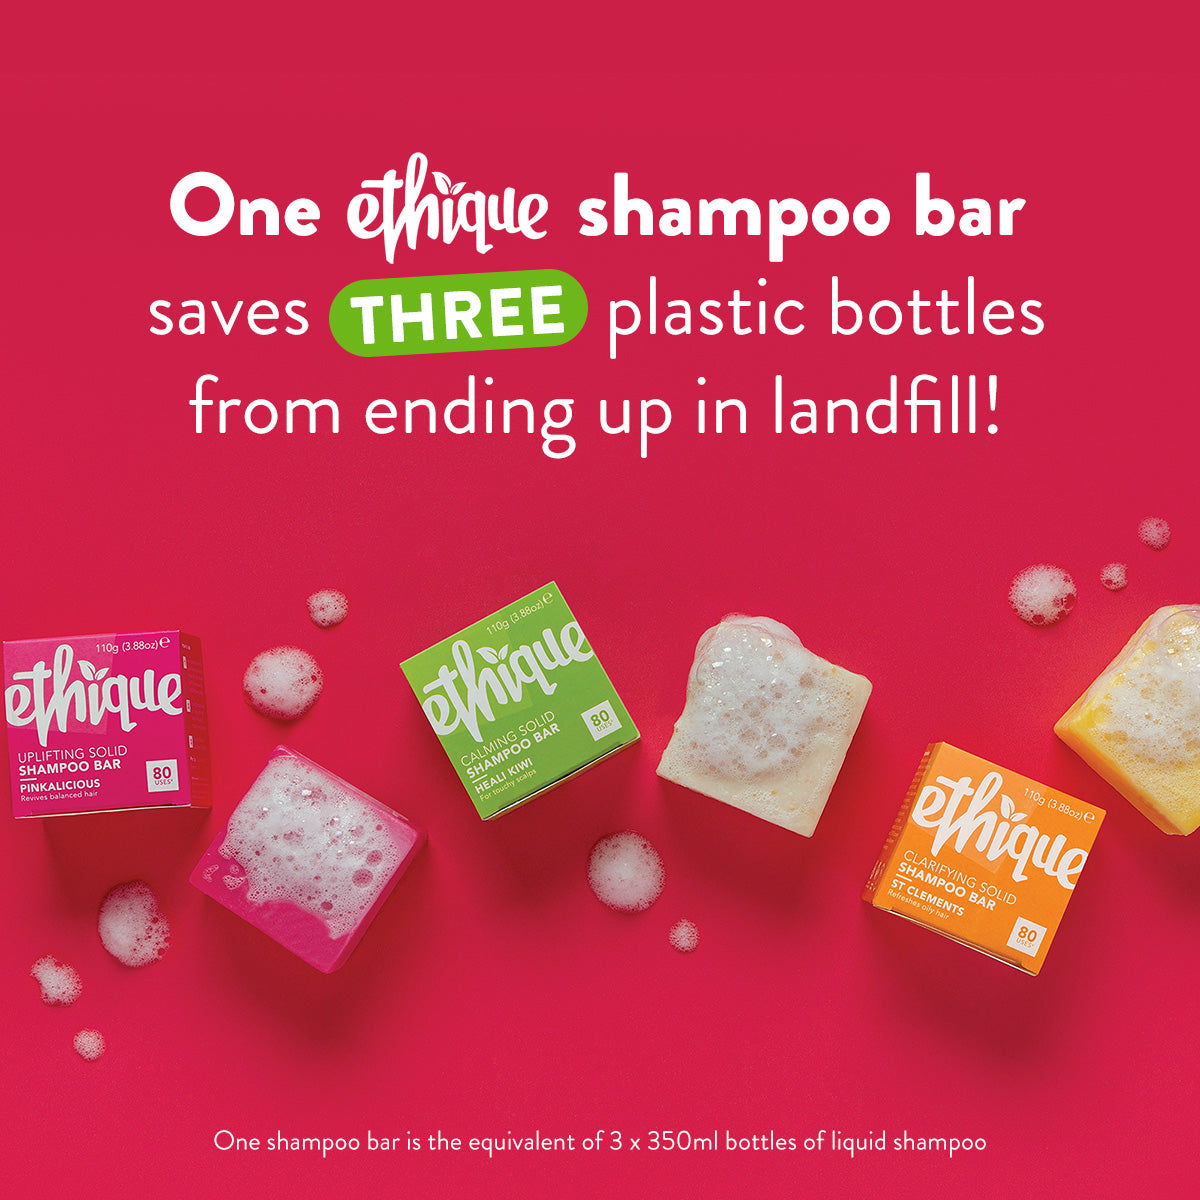 Unscented Shampoo Bar: Bar Minimum™